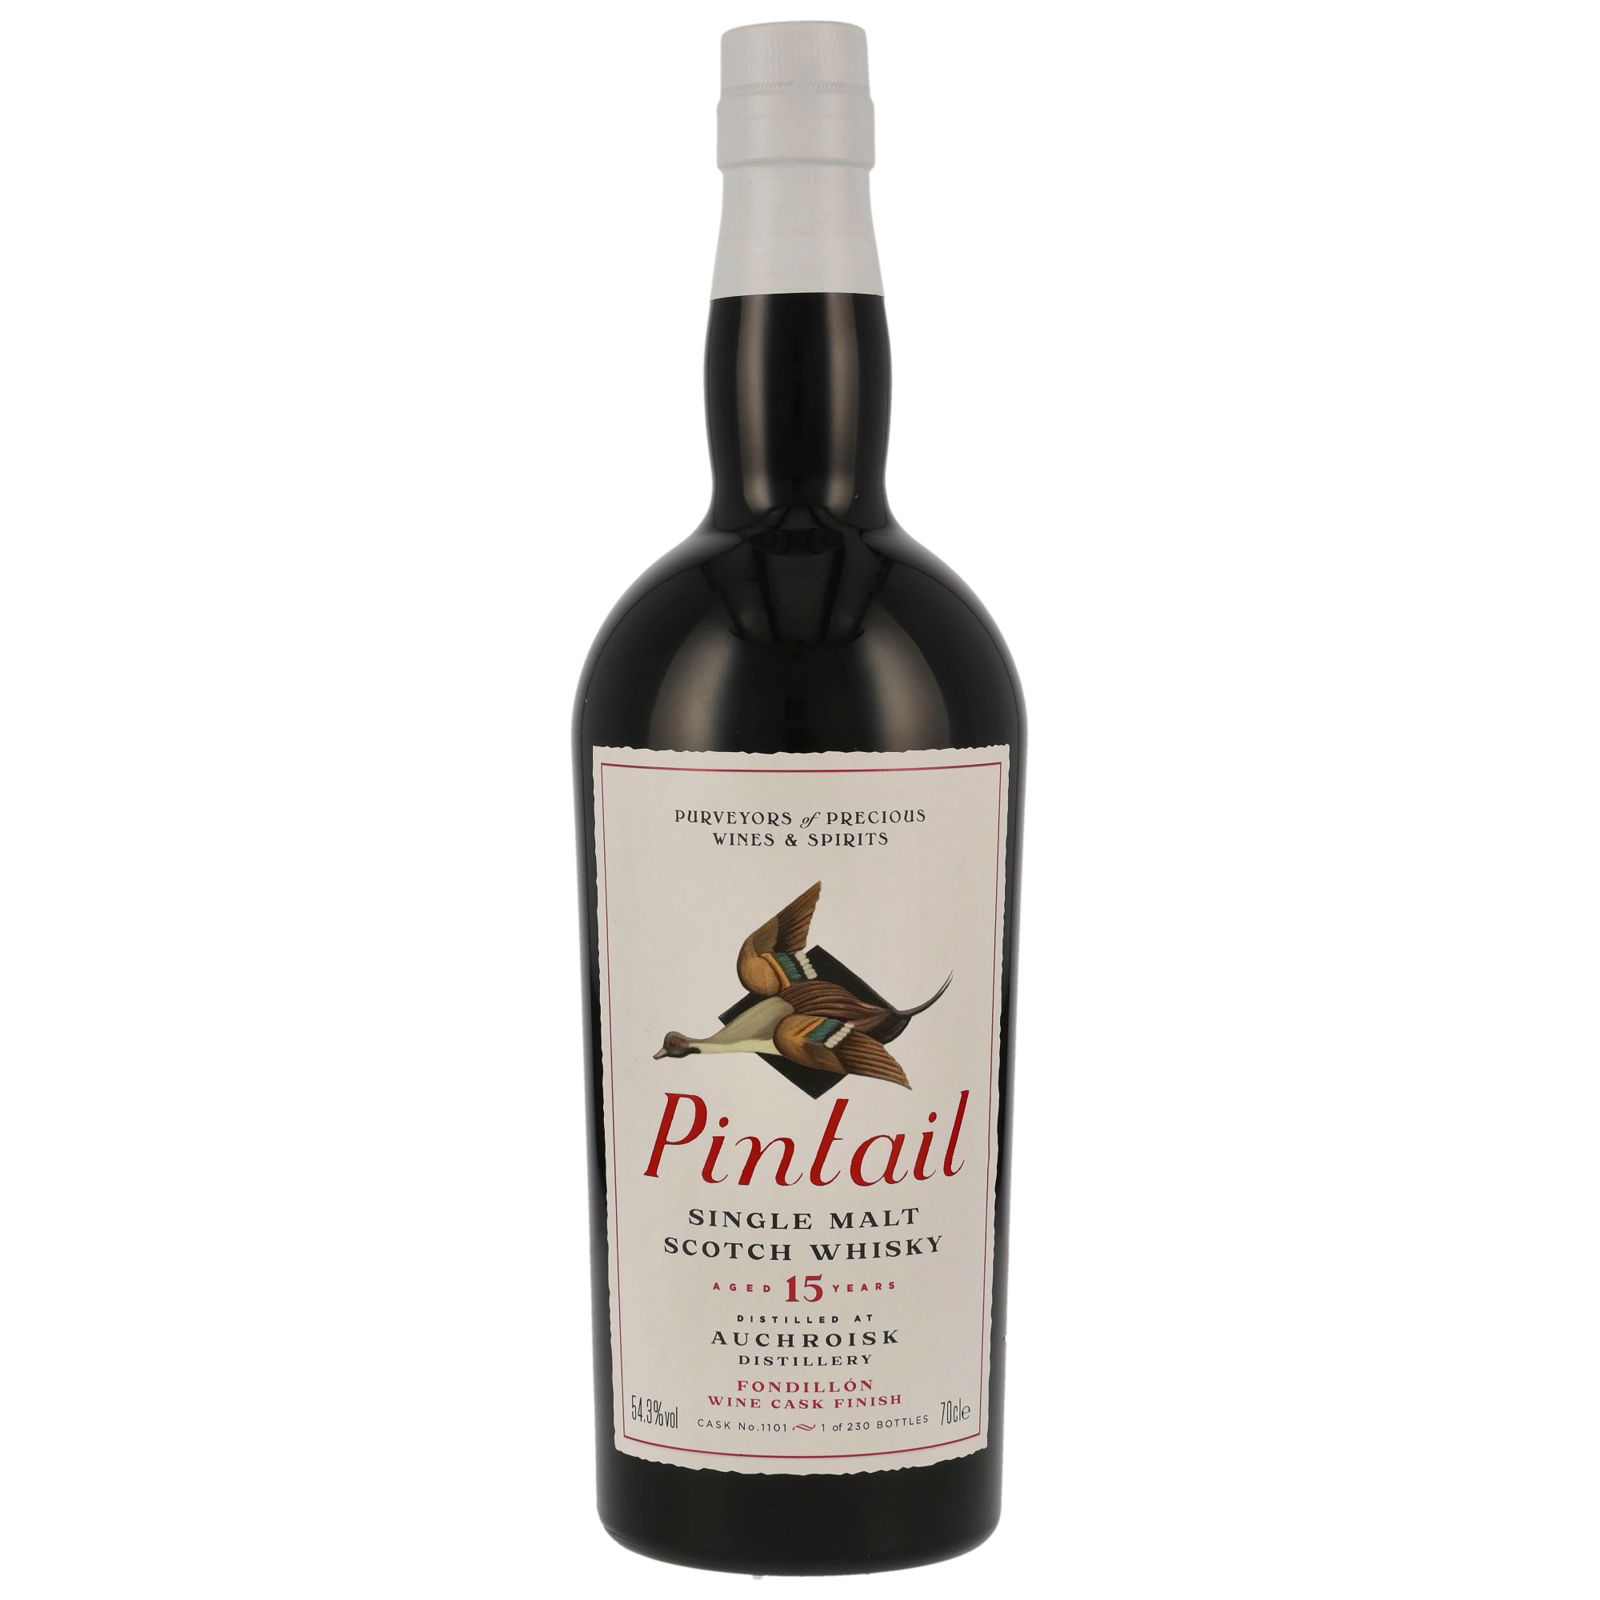 Auchroisk 2008 - 15 Jahre Fondillón Wine Cask Finish No. 1101 Pintail (The Whisky Cellar)